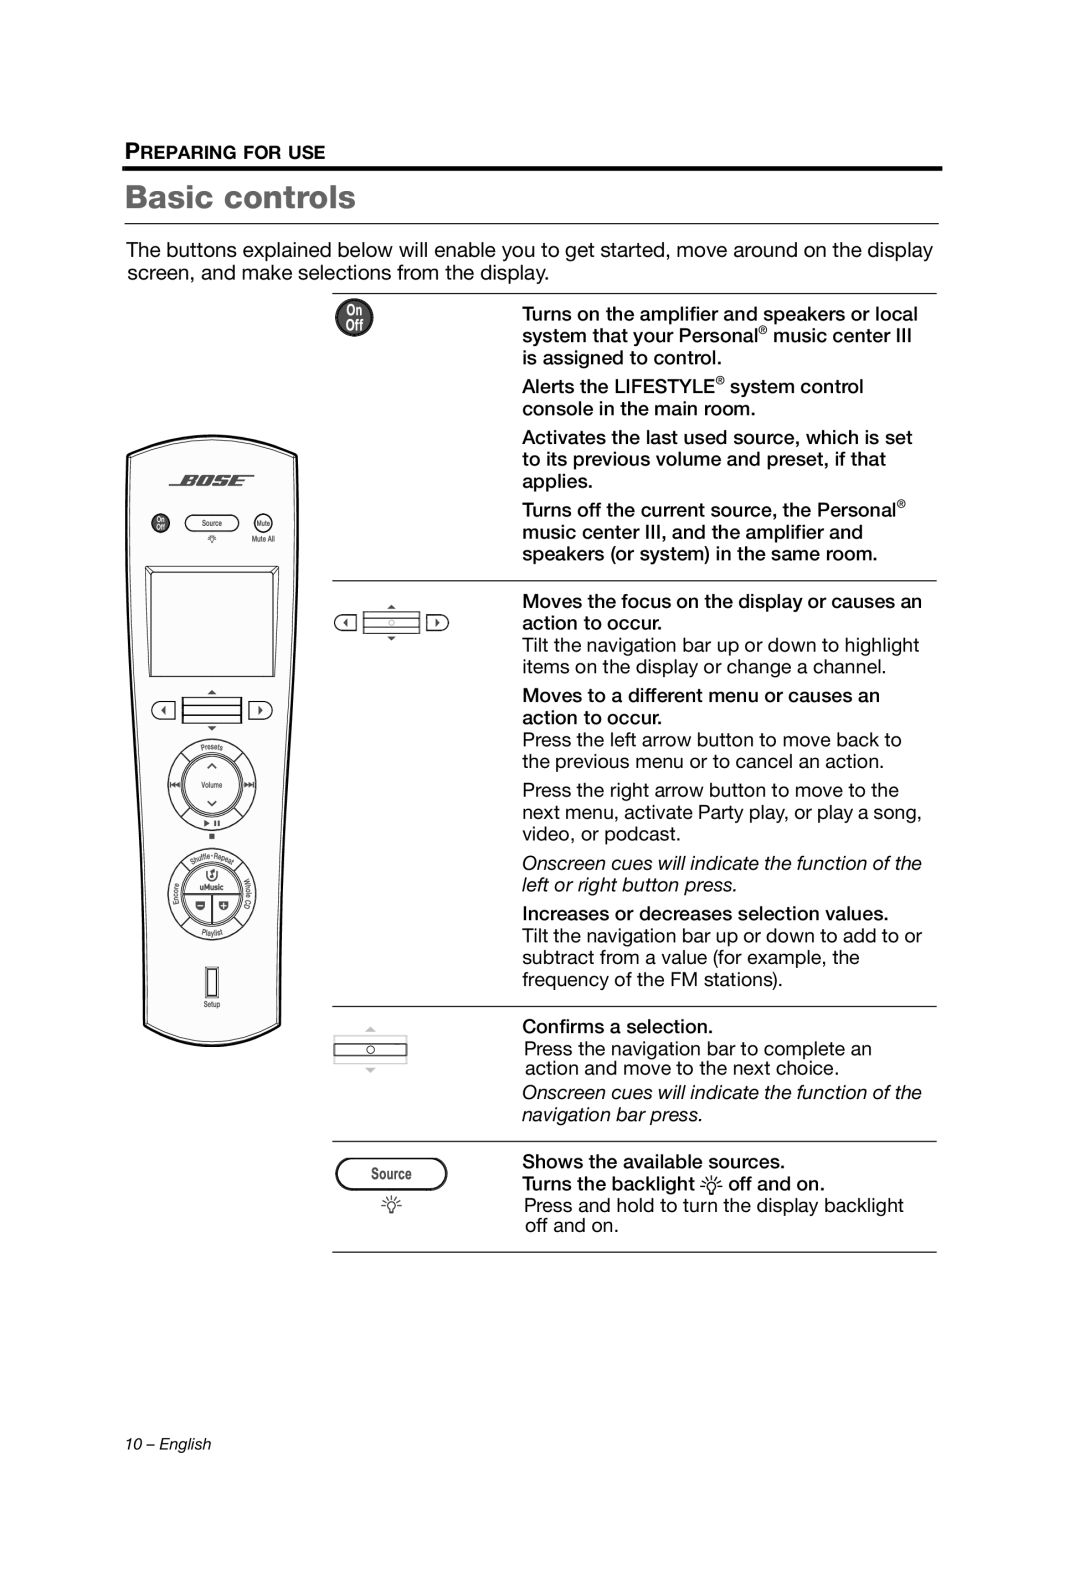 Bose PMCIII, Personal Music Center III manual Basic controls, Preparing For Use 